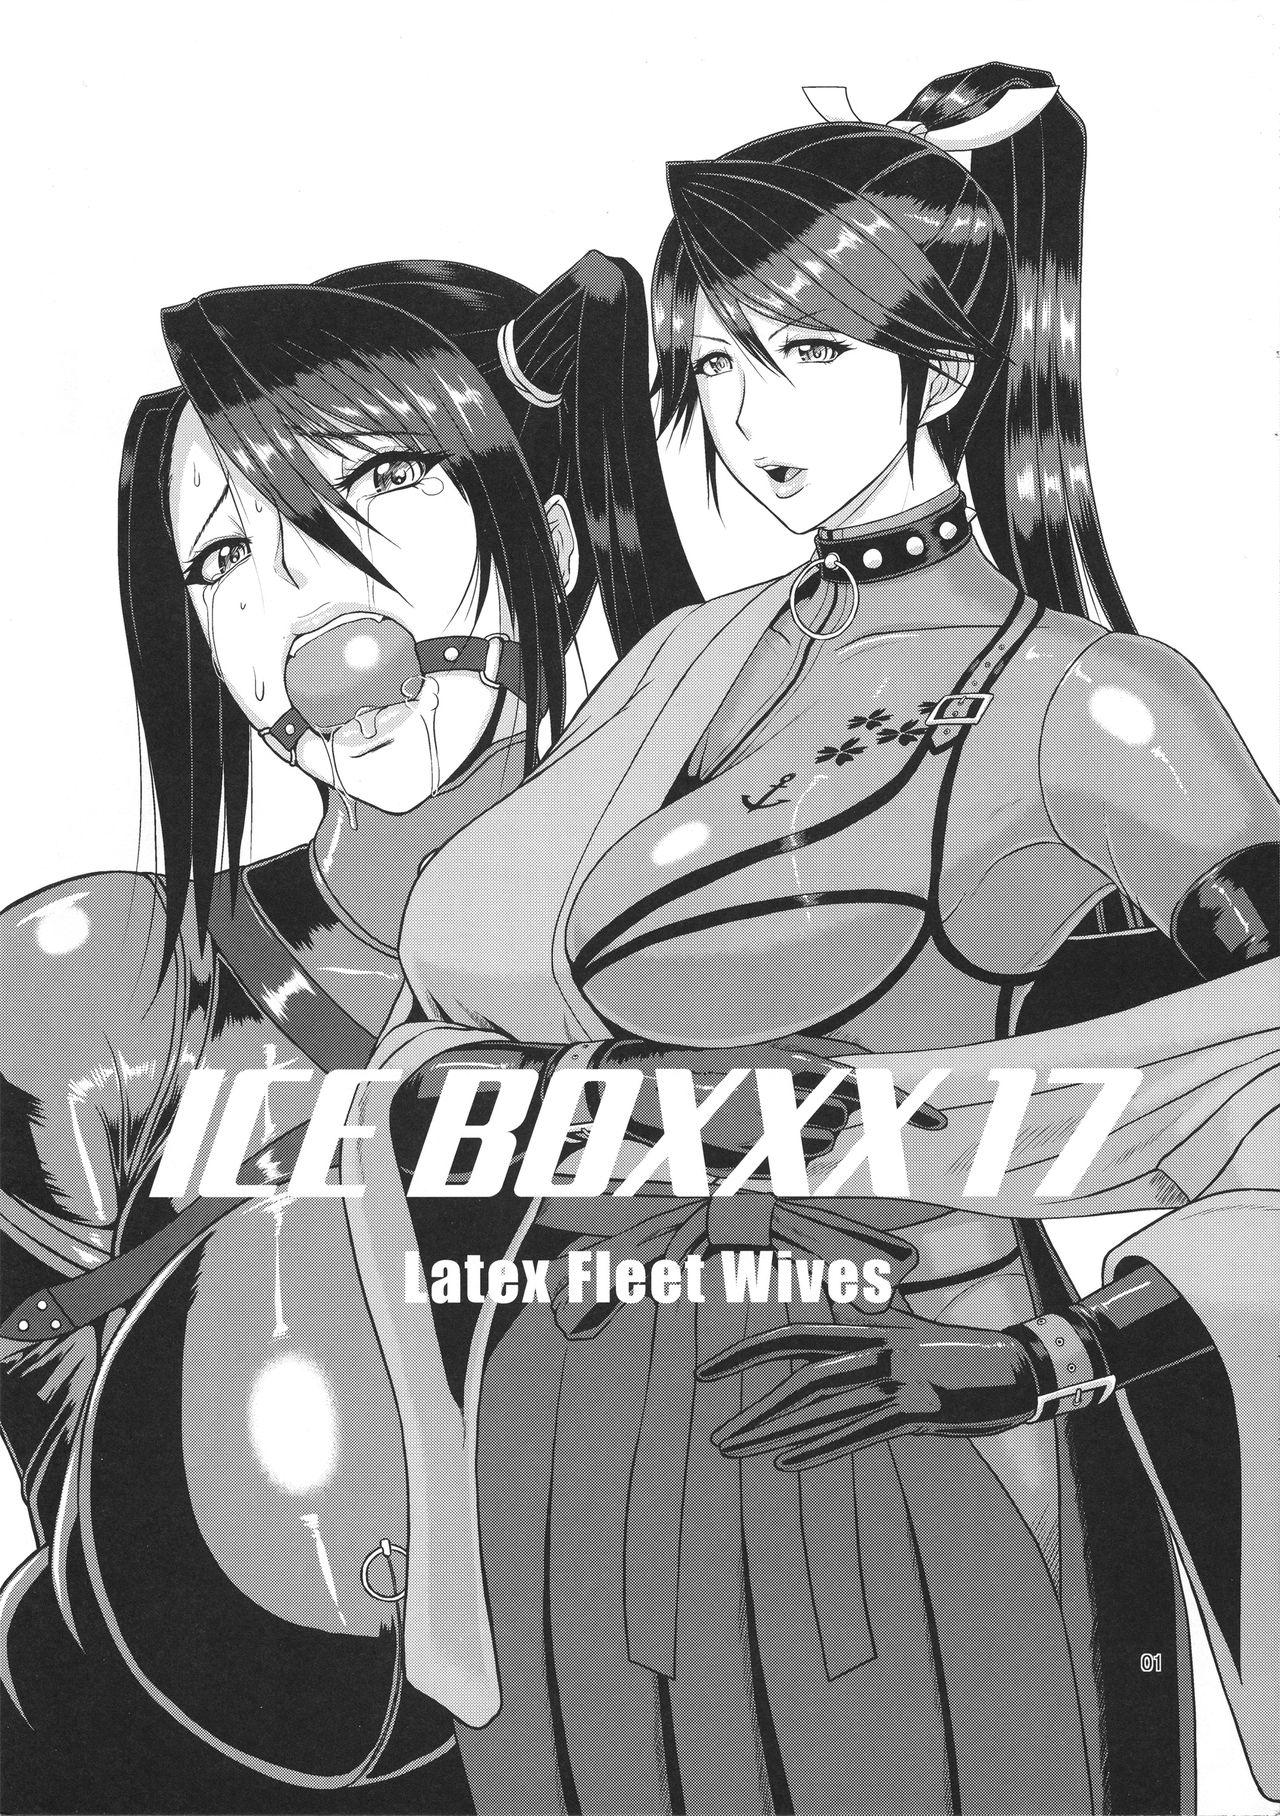 ICE BOXXX 17 Latex Fleet Wives 1